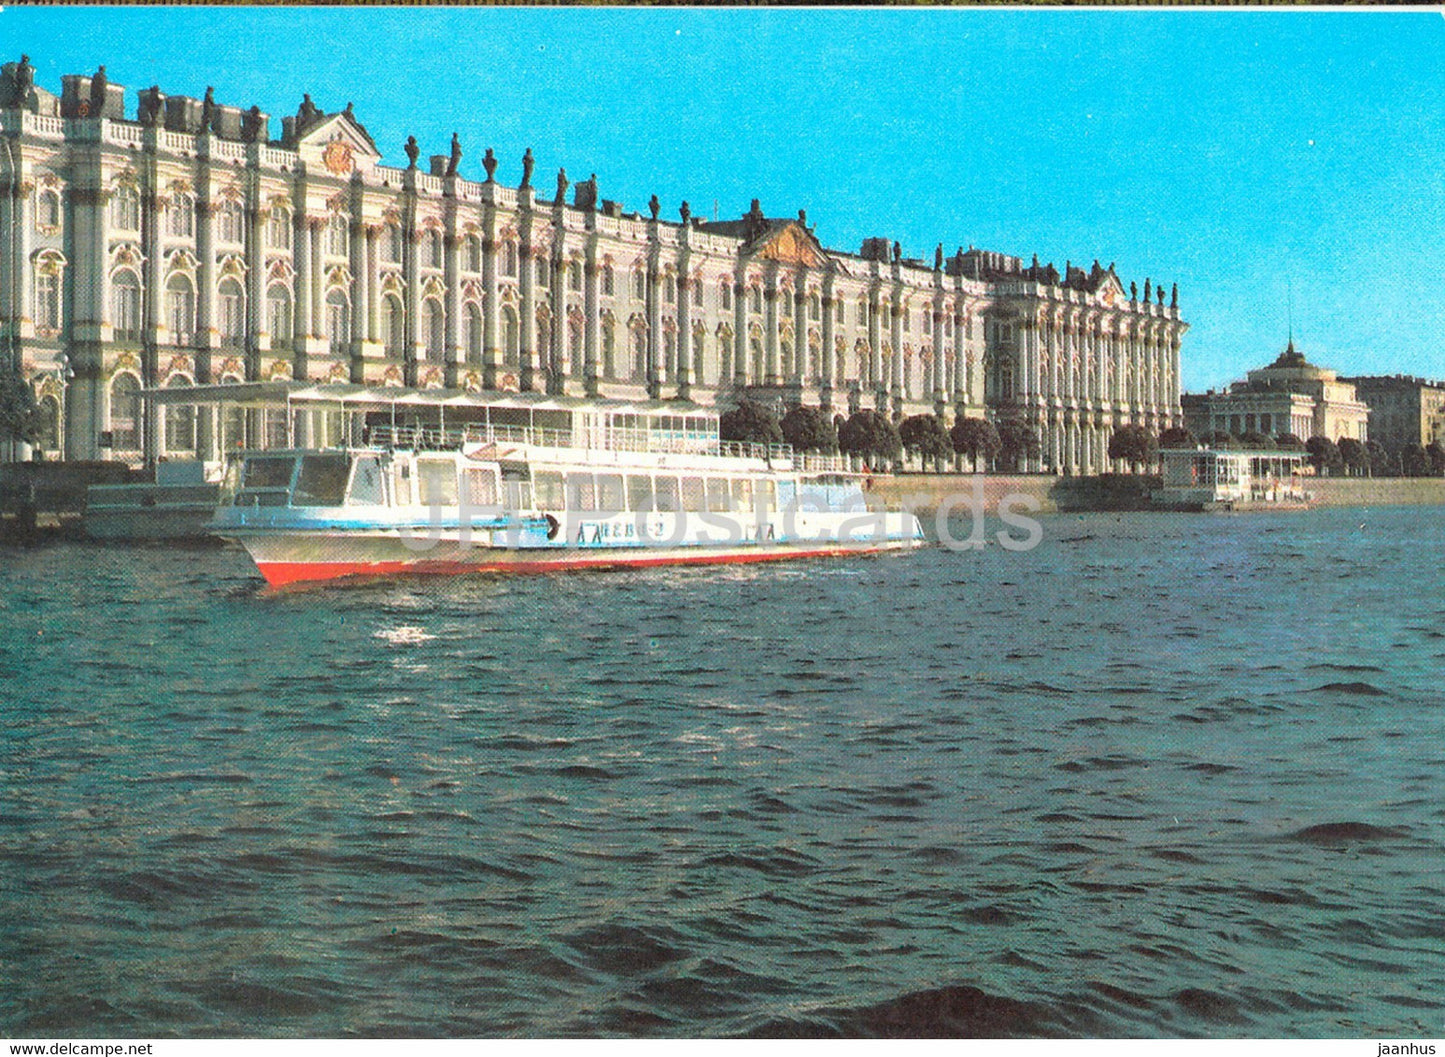 Leningrad - St Petersburg - Winter Palace - State Hermitage - ship - postal stationery - 1982 - Russia USSR - unused - JH Postcards